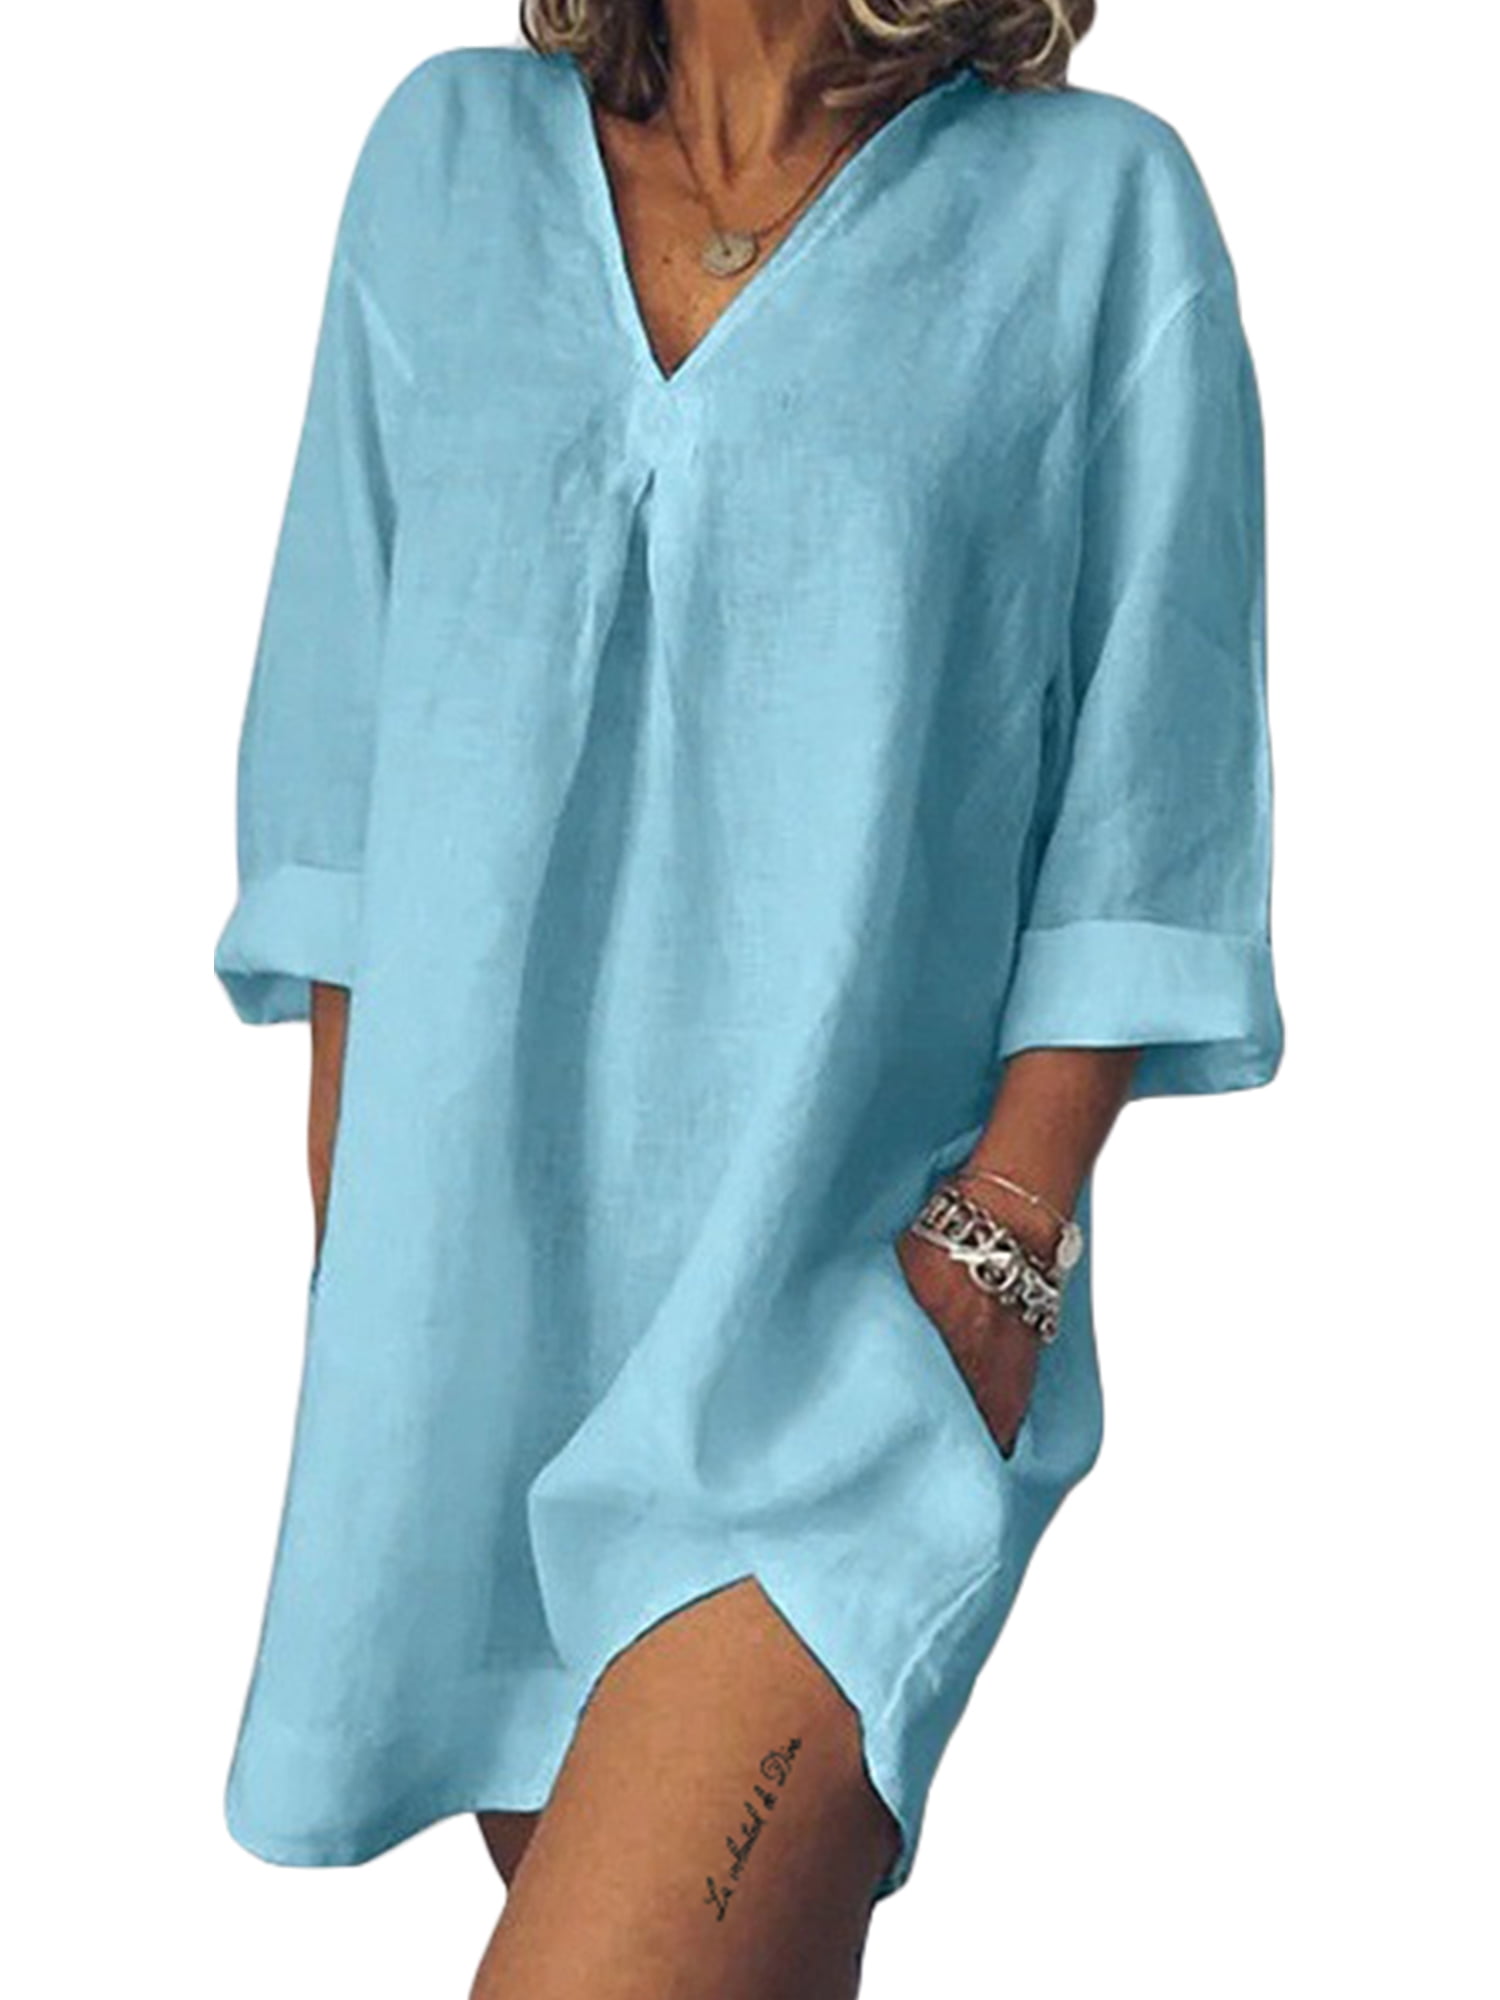 Plus Size Women Cotton Linen Short Sleeve Tops Blouse Summer Baggy Tunic T Shirt